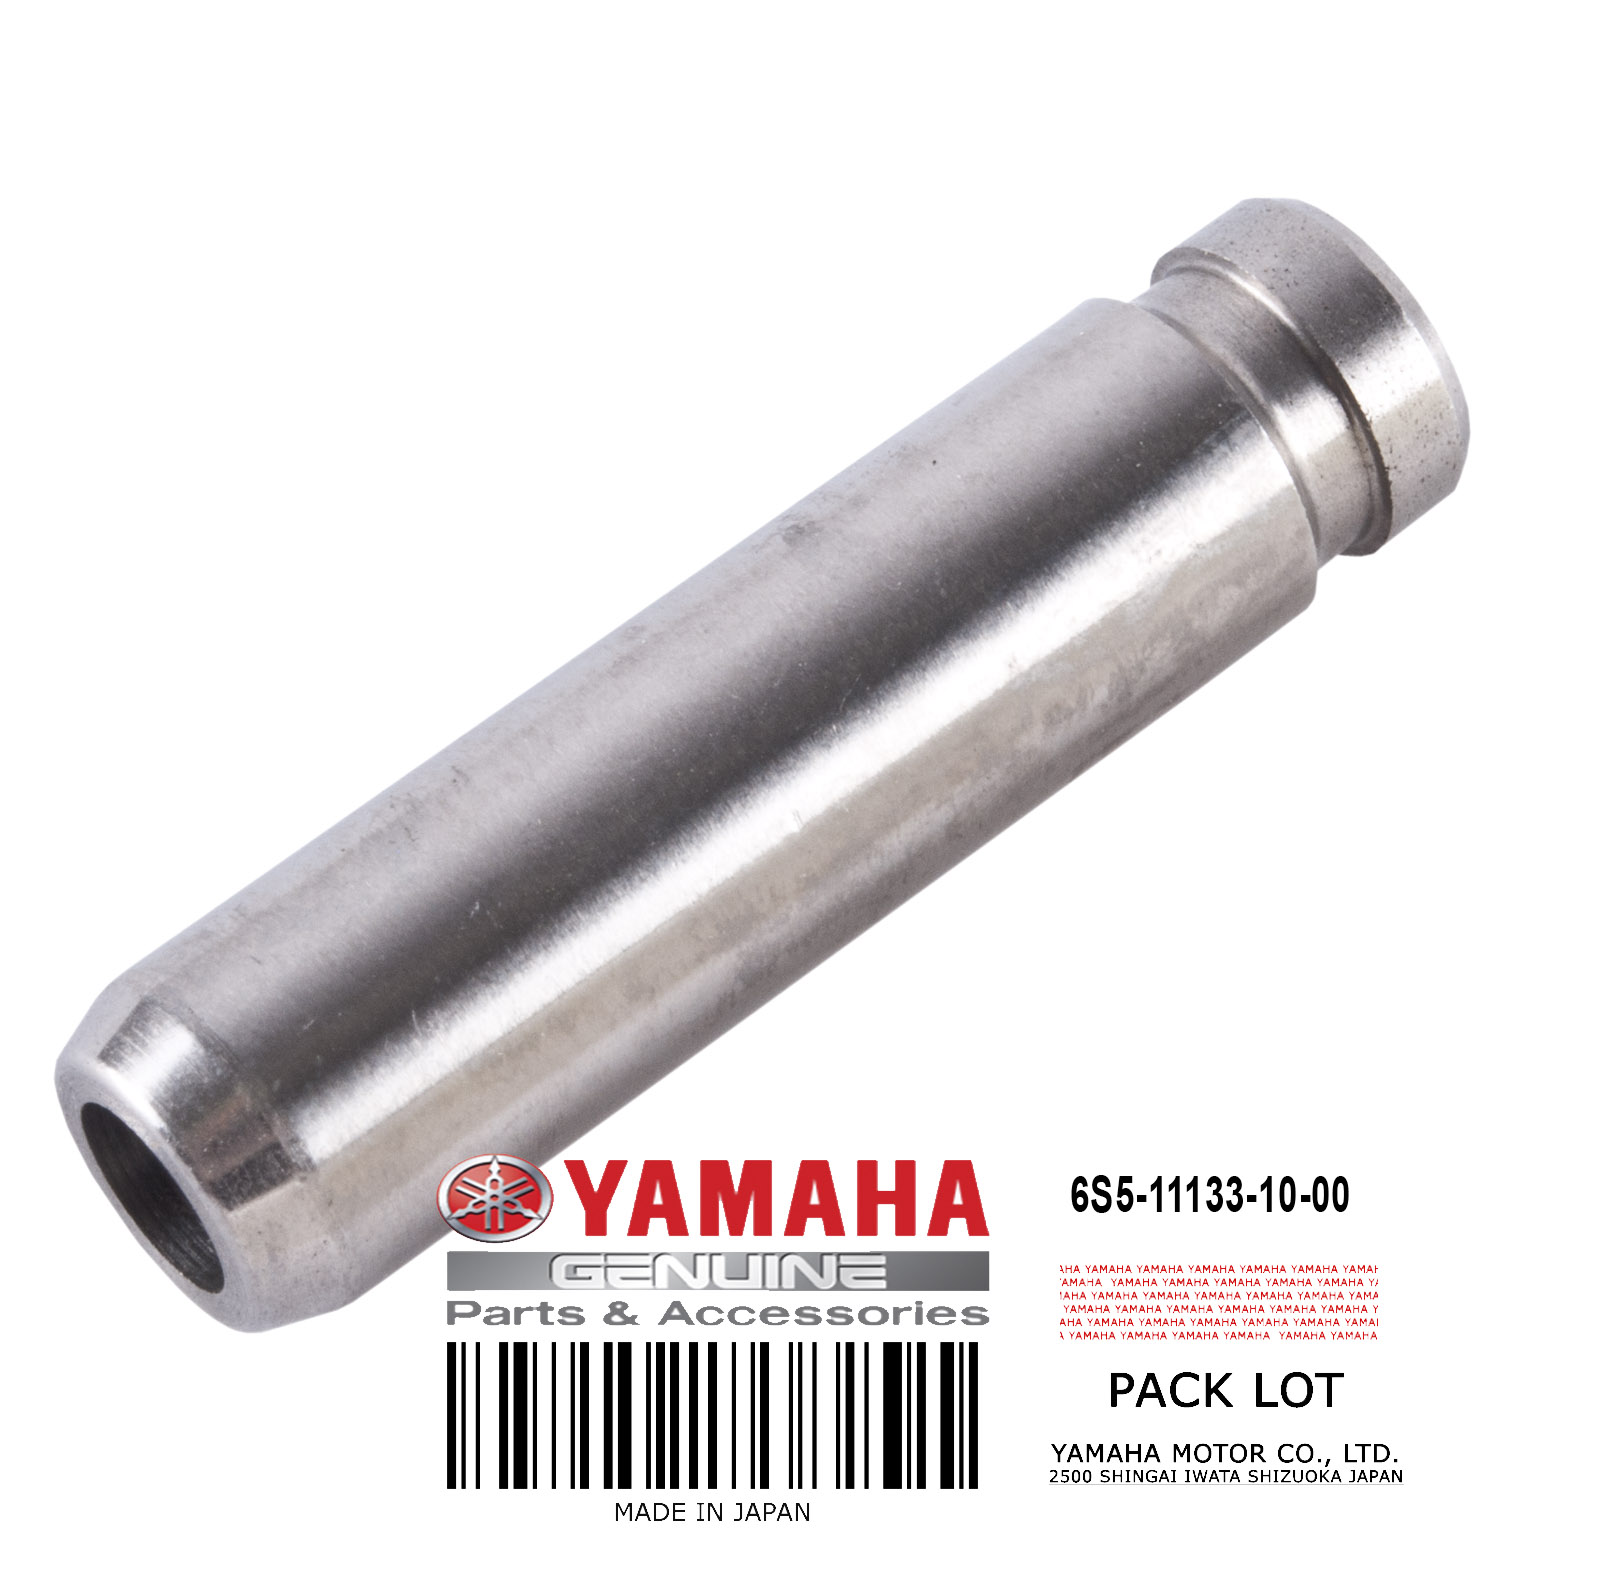 Single Valve Guide for Yamaha HO / SHO / SVHO Cylinder Heads